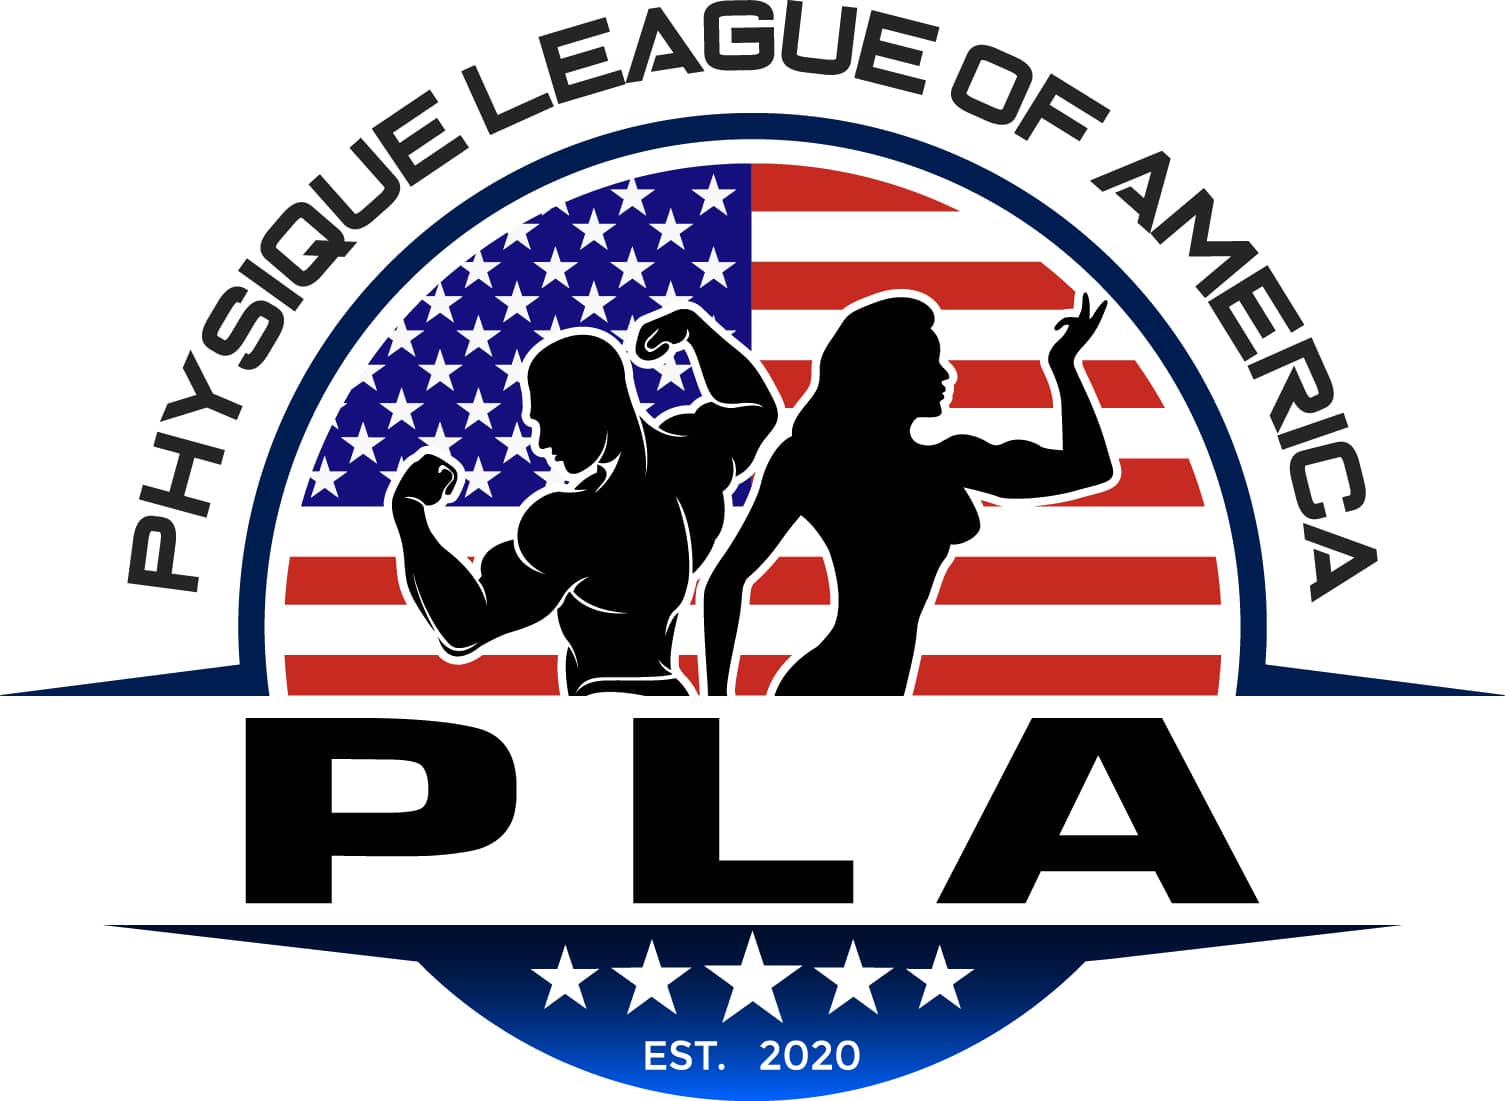 Physique League of America